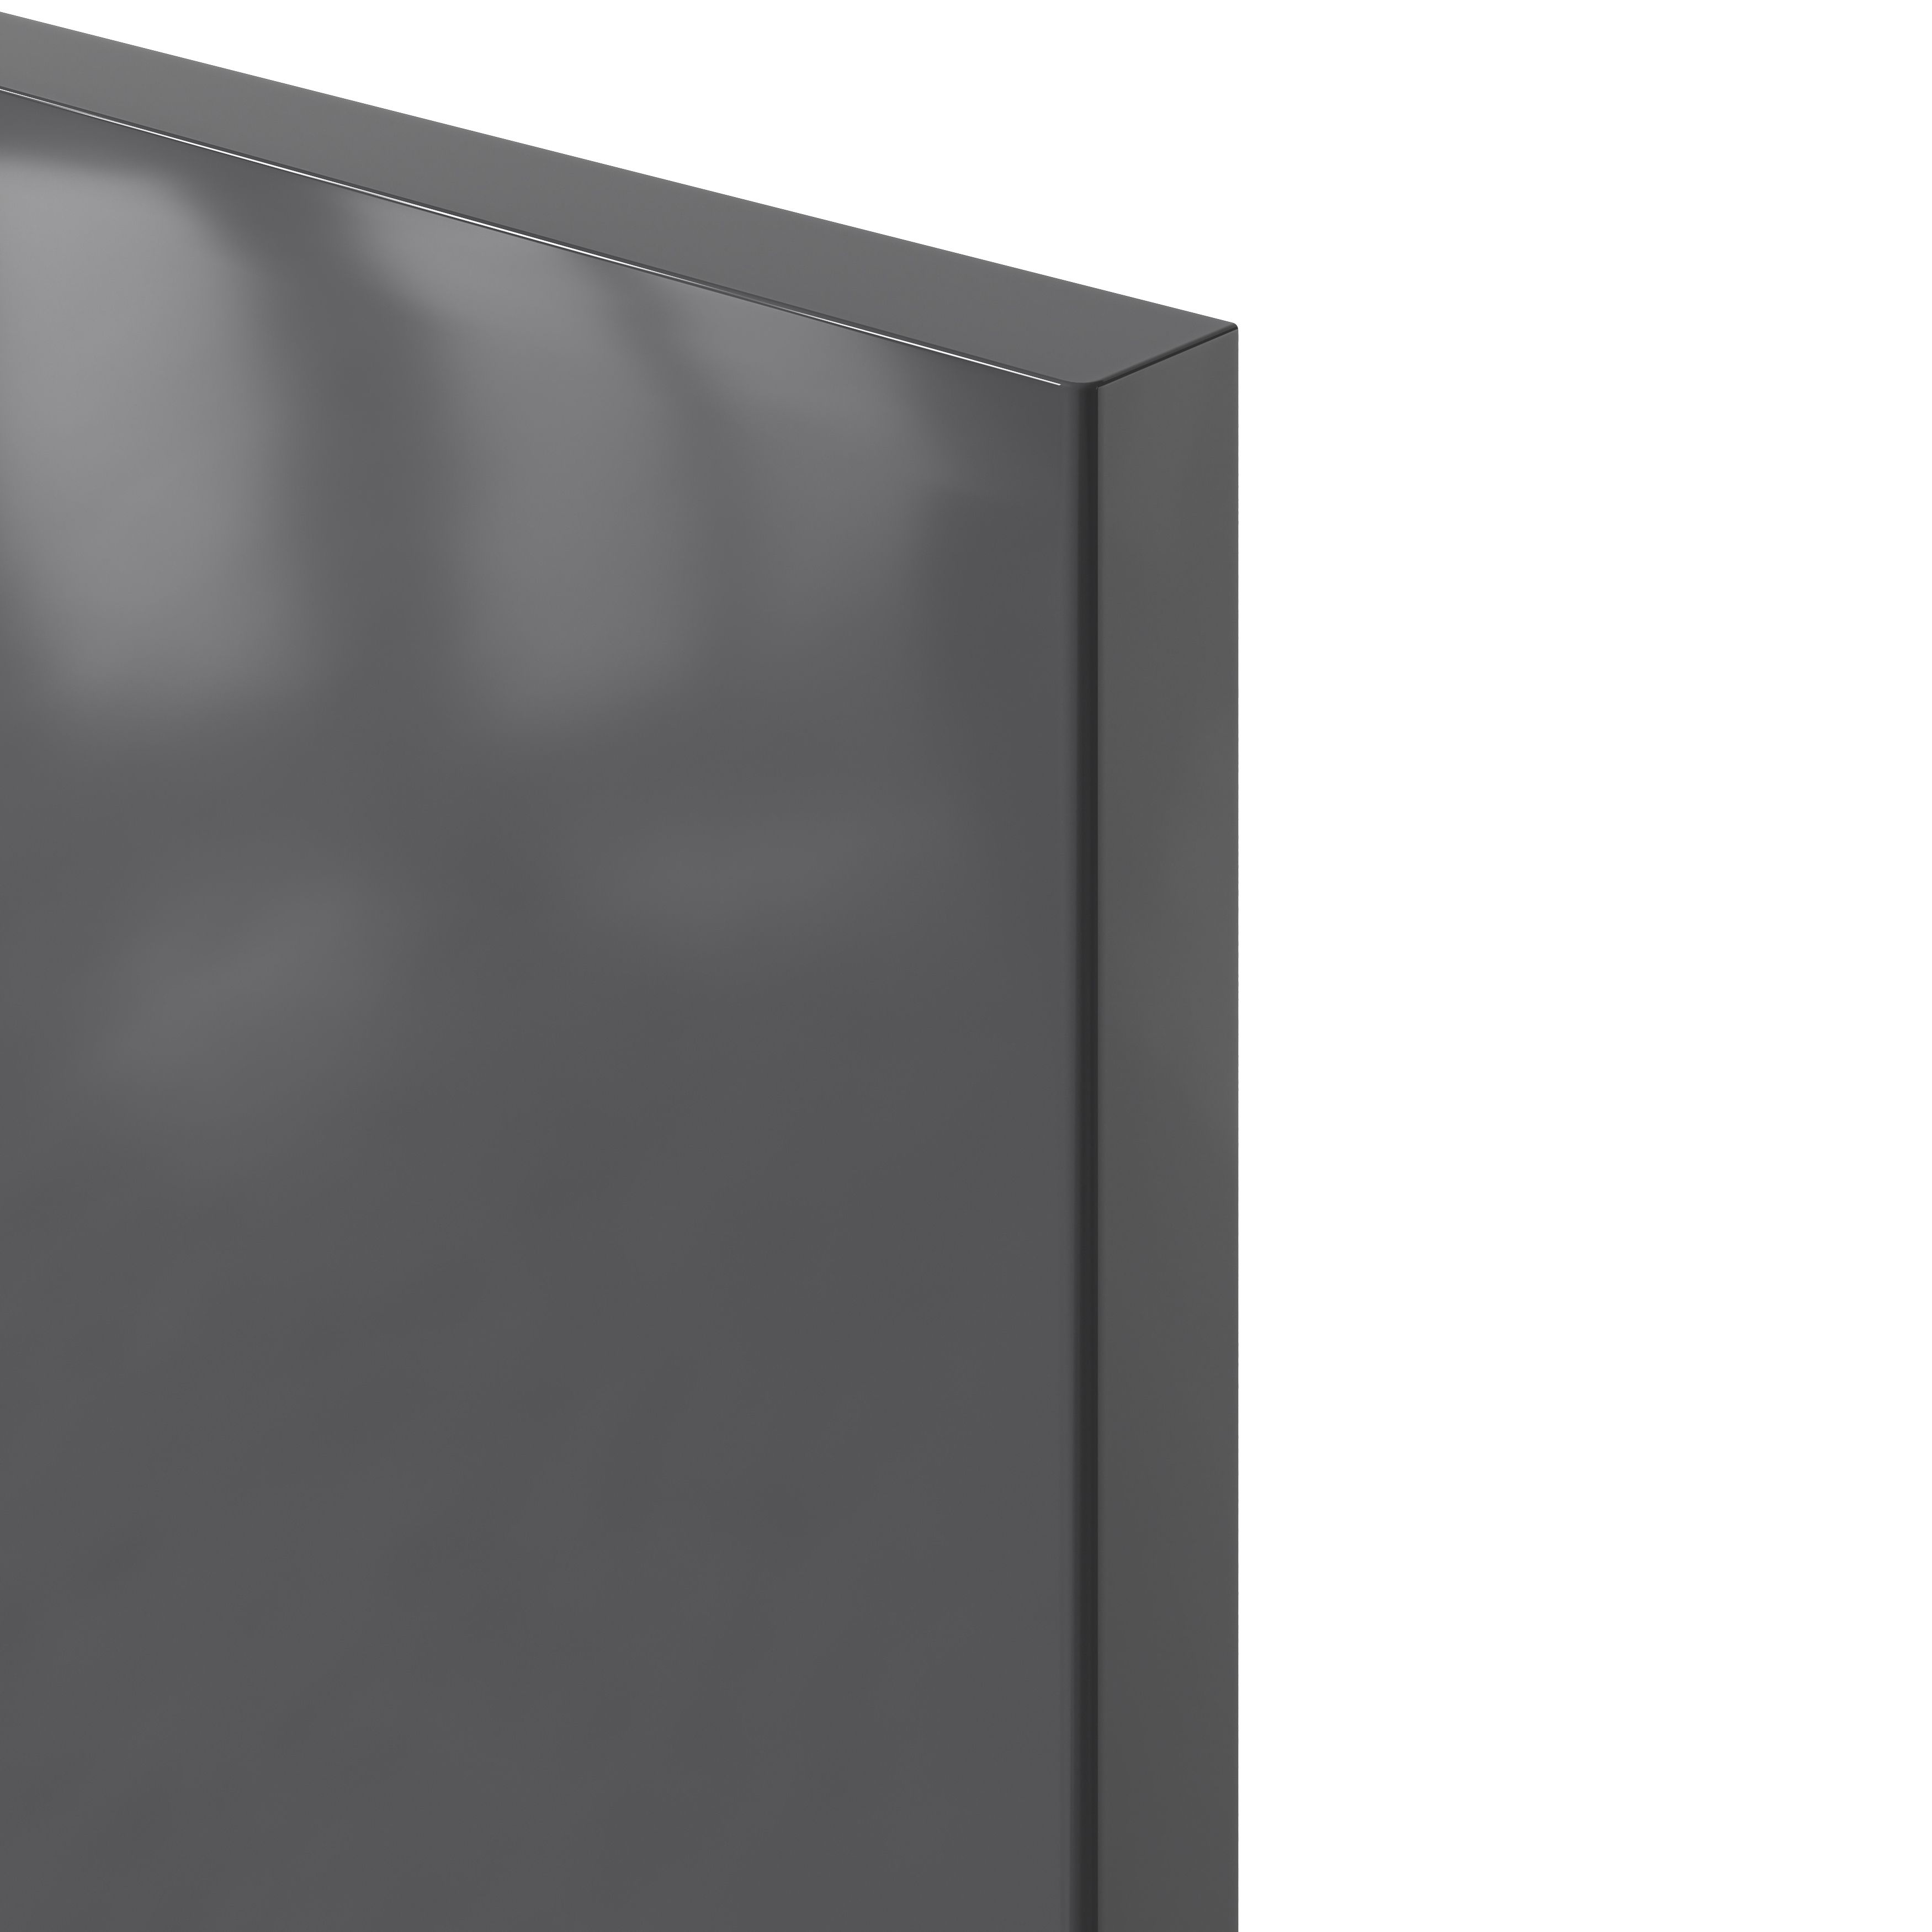 GoodHome Stevia Innovo handleless gloss anthracite slab Drawer front, bridging door & bi fold door, (W)800mm (H)340mm (T)18mm